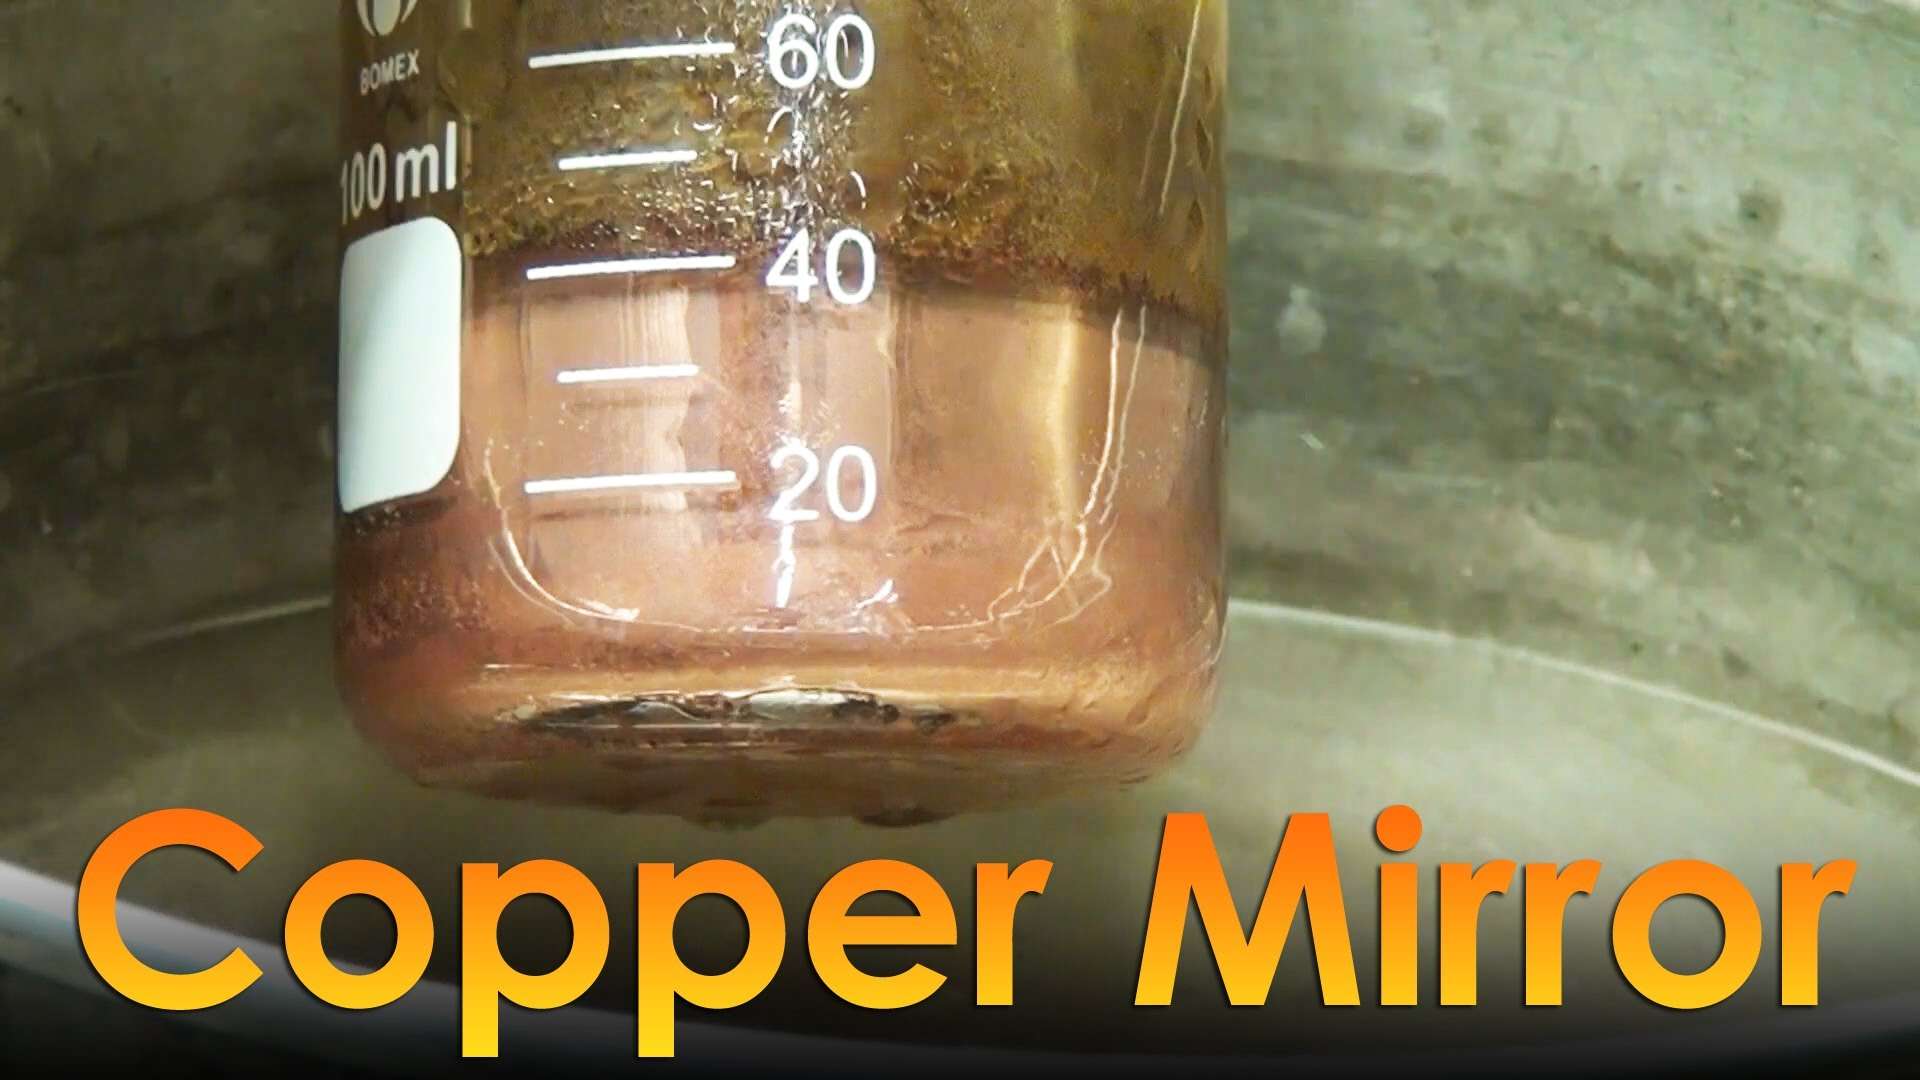 Make elemental Copper - Copper mirror chemical reaction!